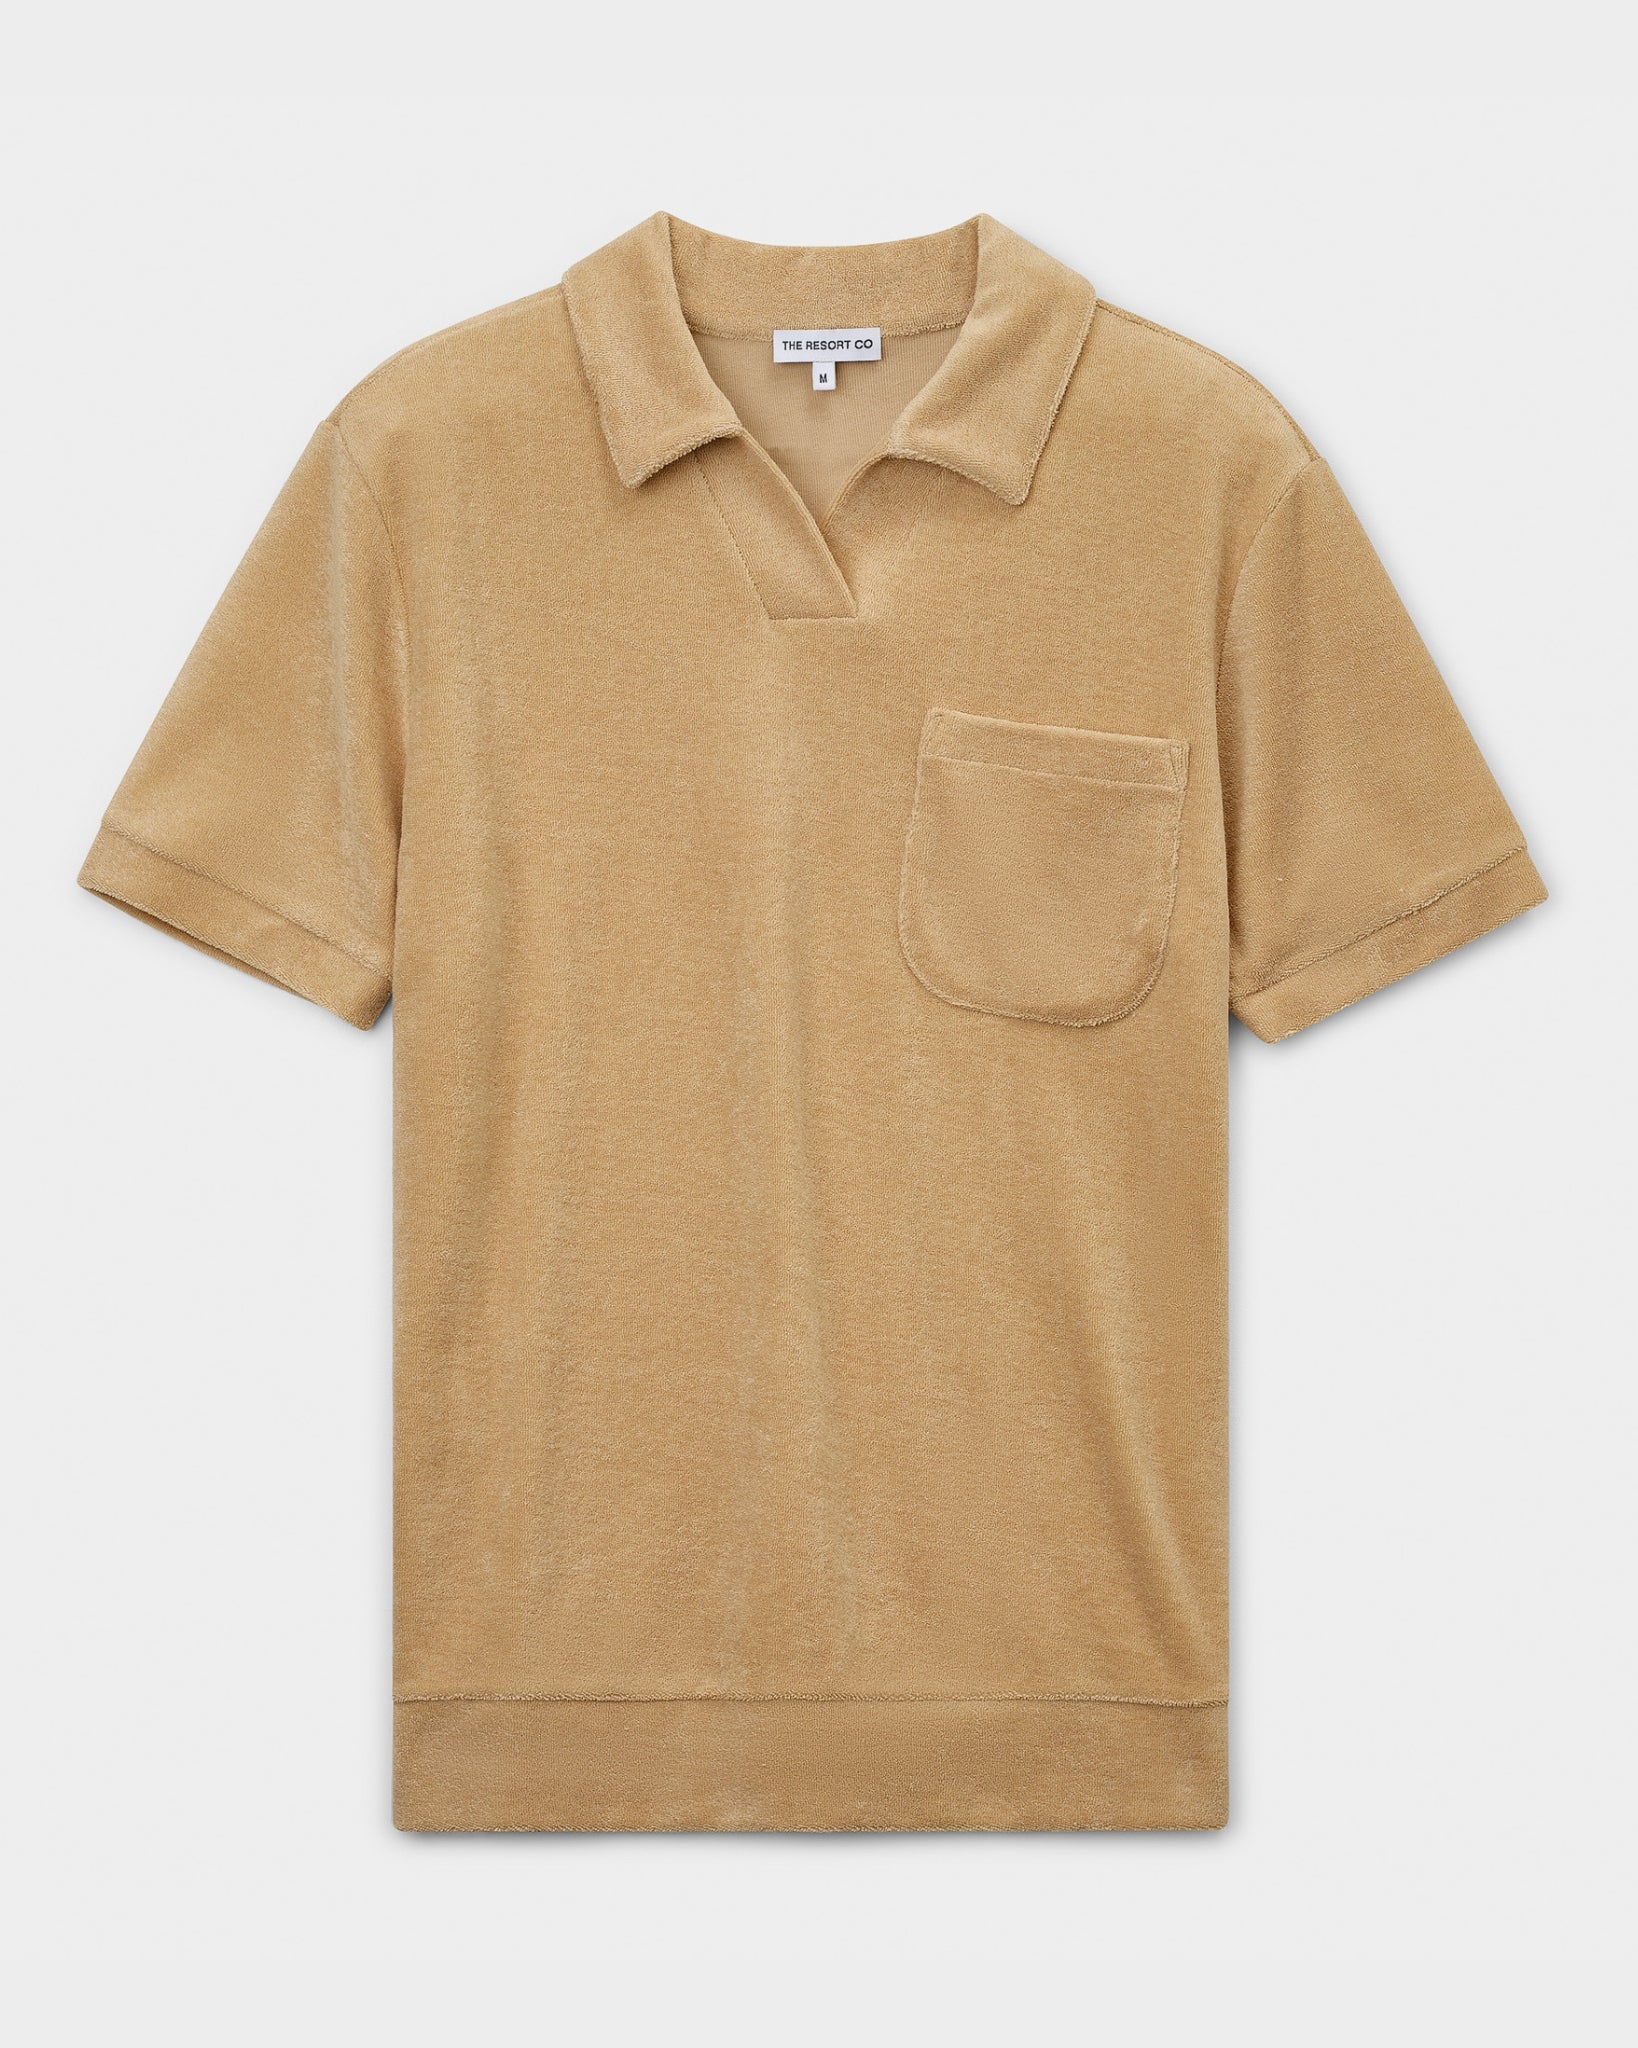 Terry Polo Shirt Caramel - THE RESORT CO